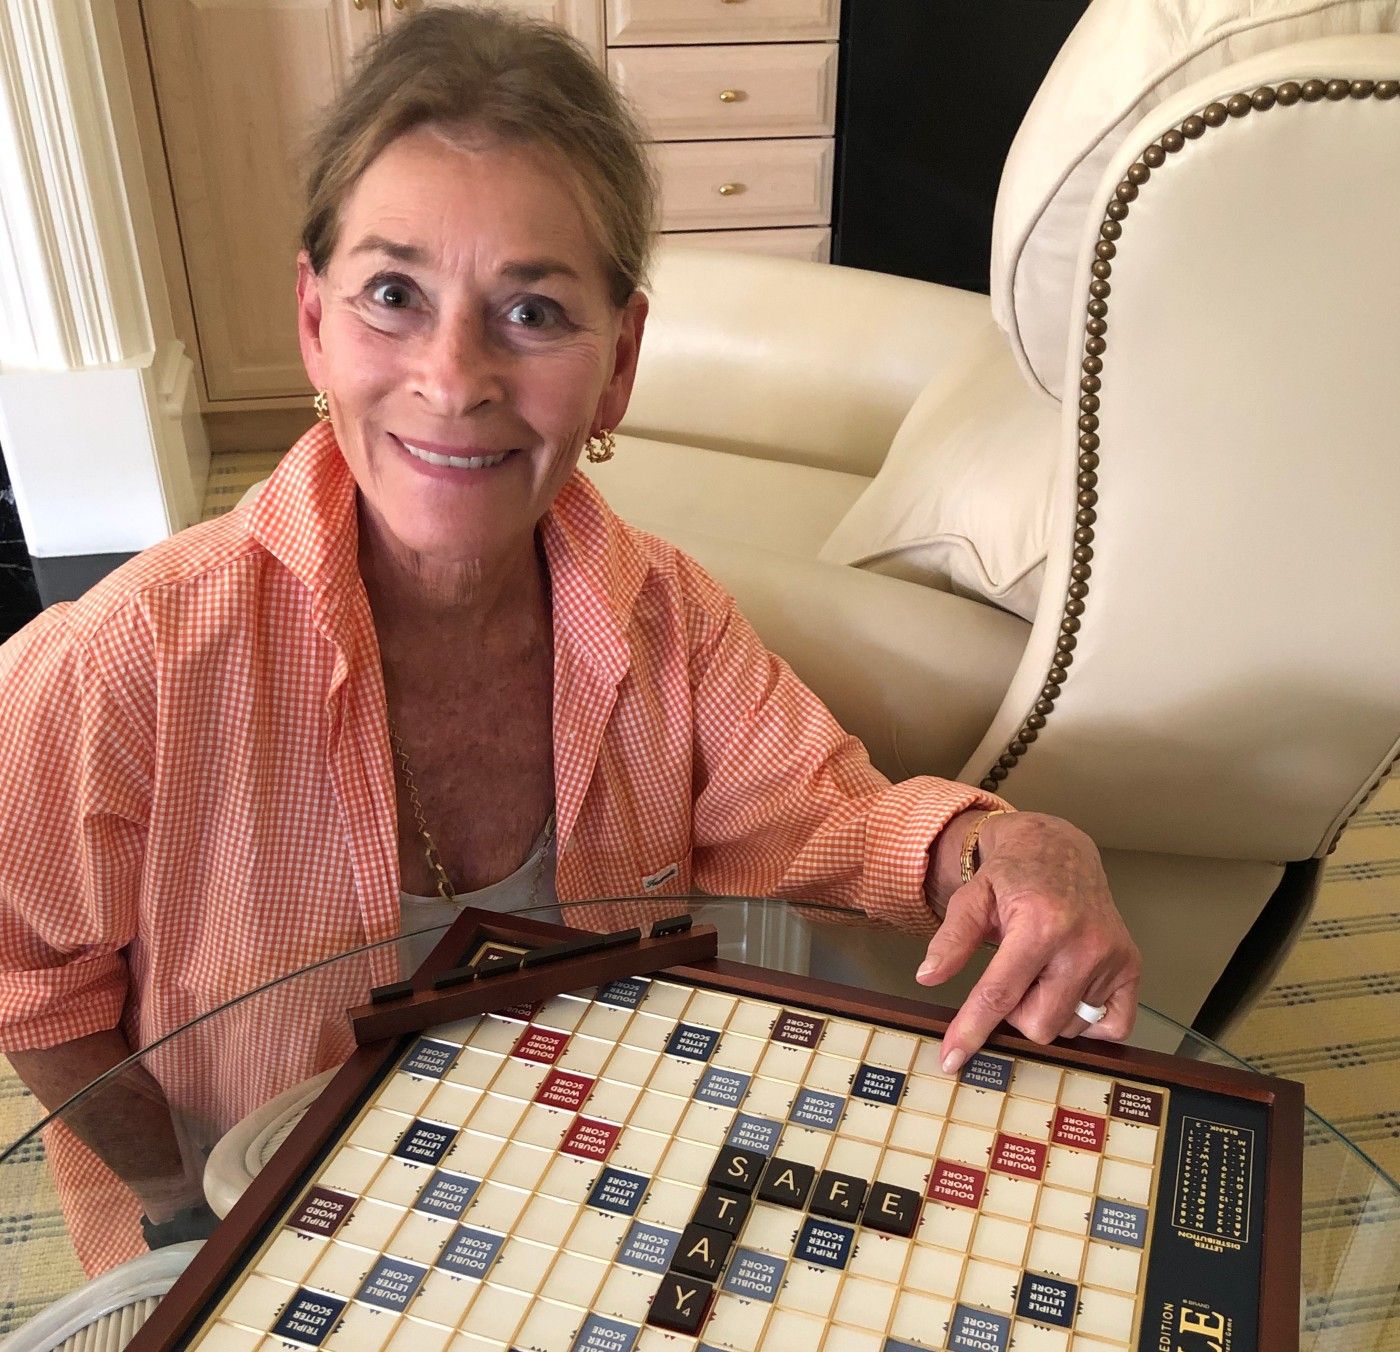 Judge Judy Scrabble game